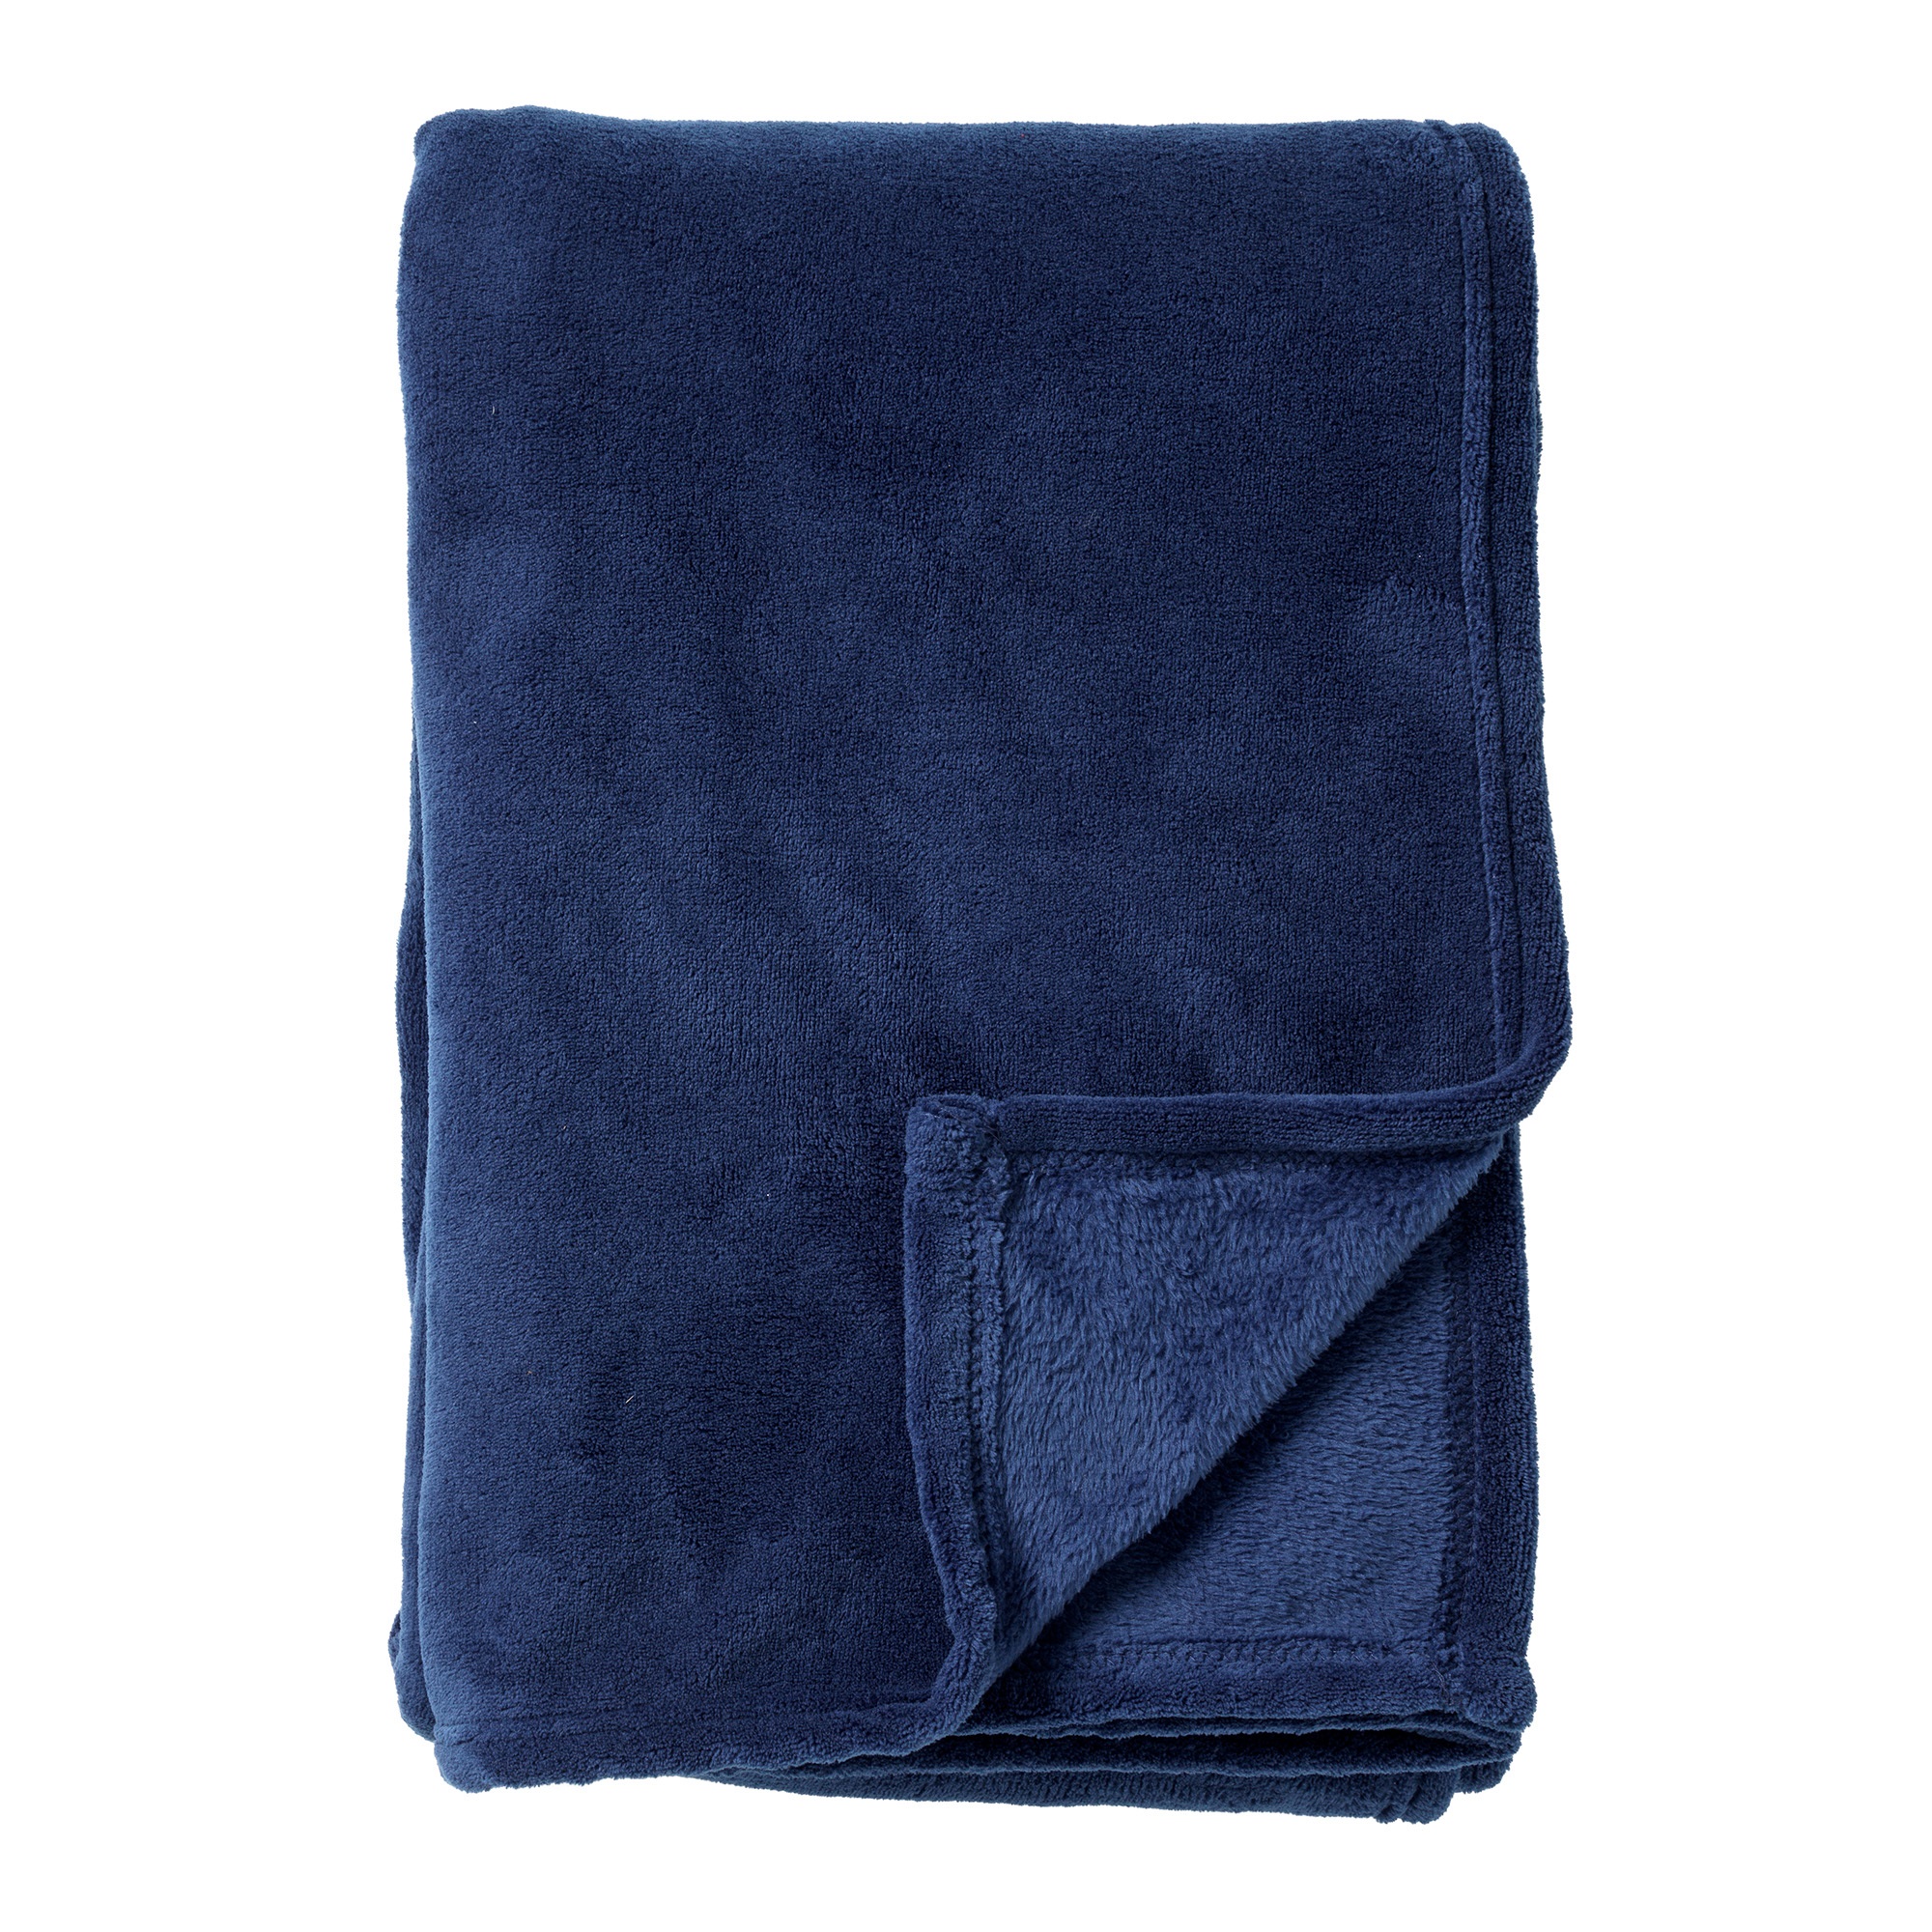 HARVEY - Plaid 150x200 cm - superzachte deken van fleece - Insignia Blue - blauw